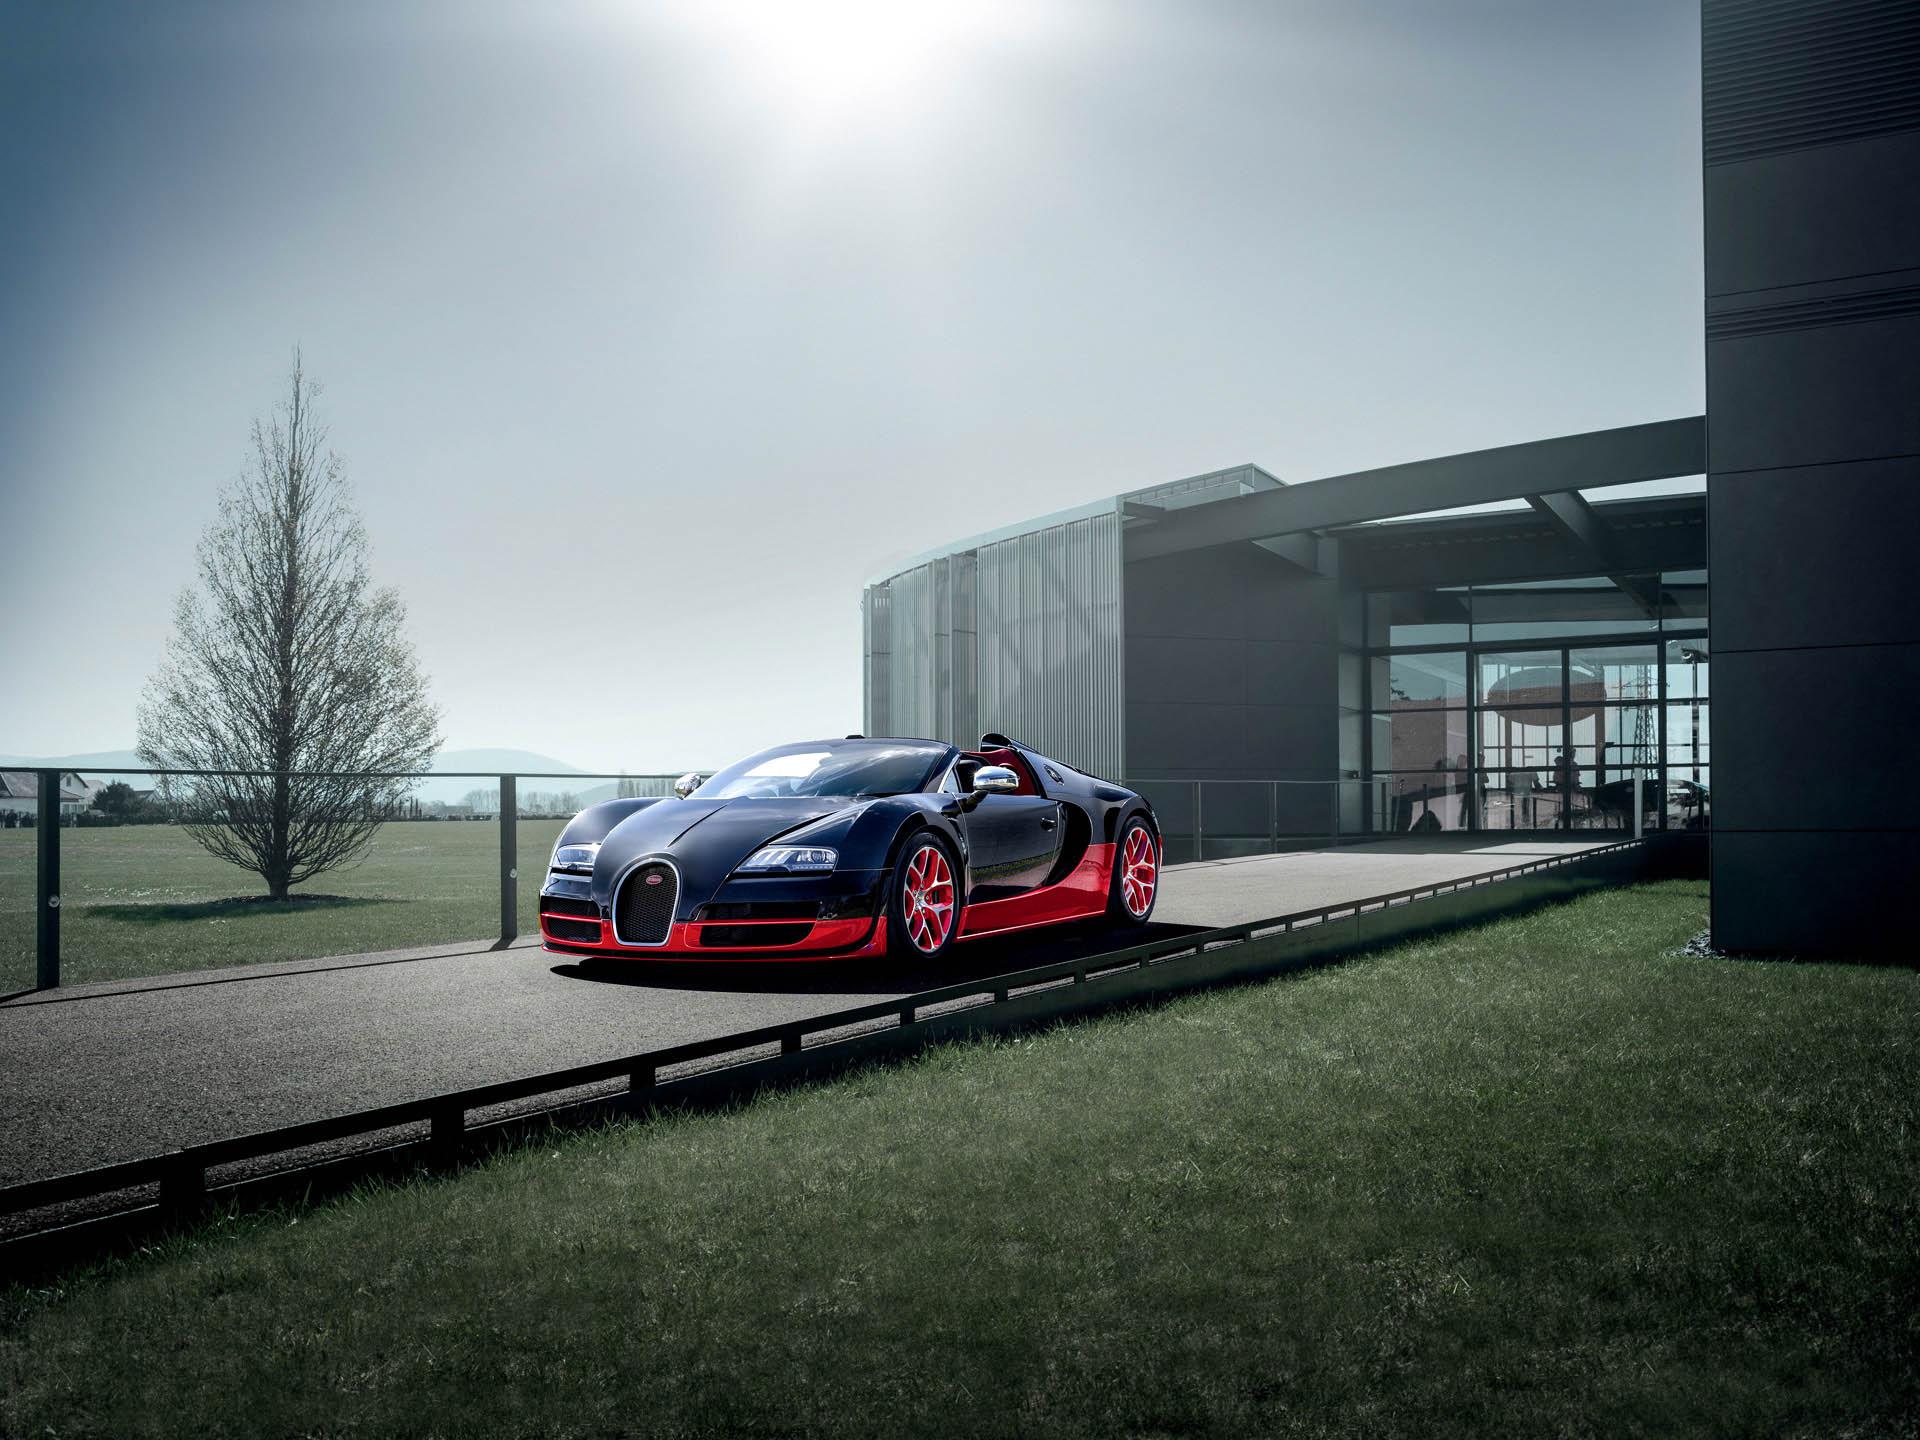 Bugatti Veyron Wallpaper & Picture In High Quality HD Wallpaper